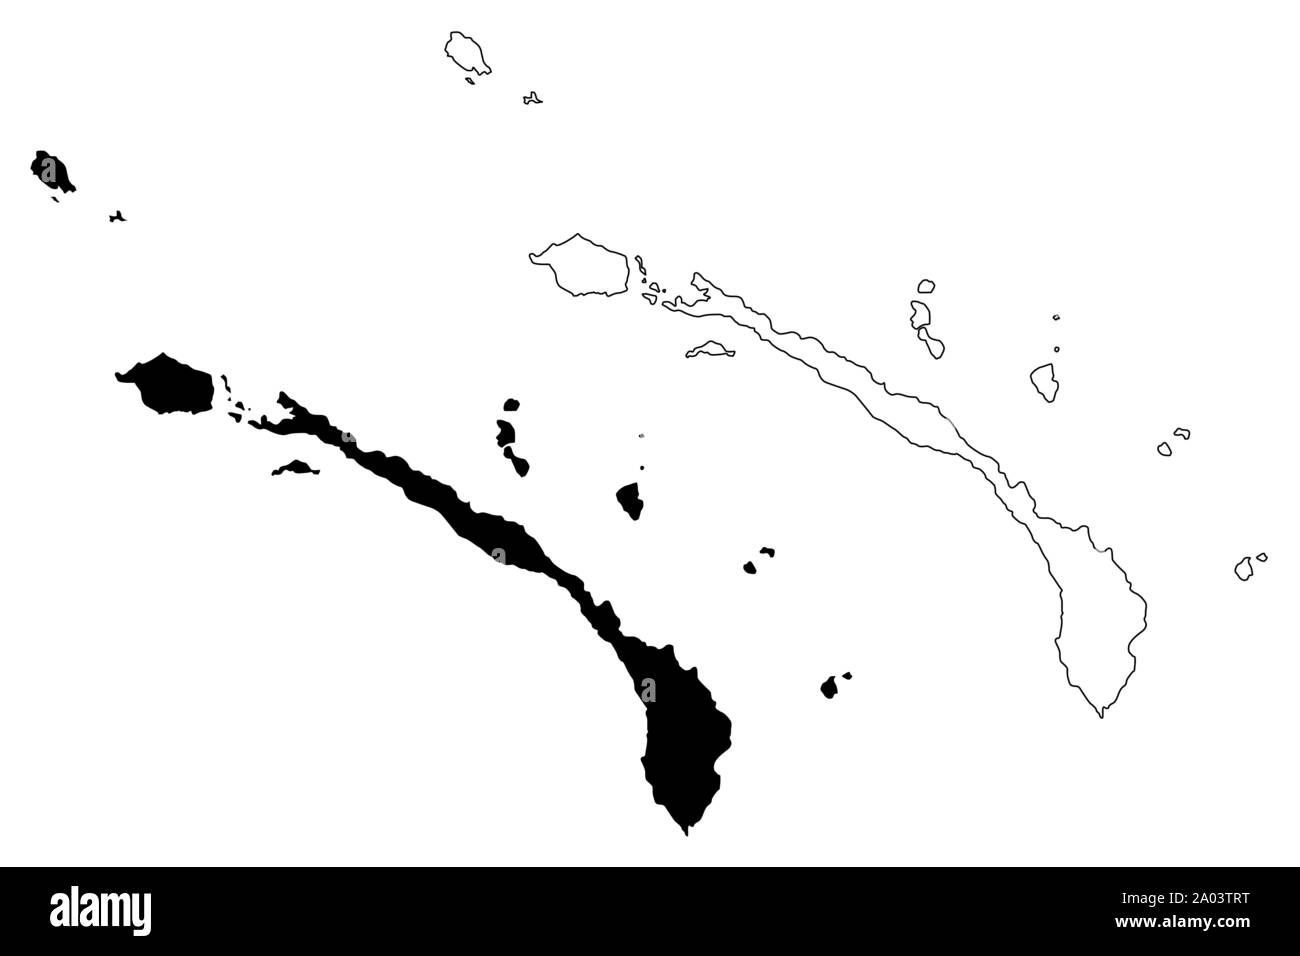 New Ireland Province (Unabhängiger Staat Papua-Neuguinea, PNG, Provinzen Papua Neu Guinea) Karte Vektor-illustration, kritzeln Skizze Neue Mecklenb Stock Vektor